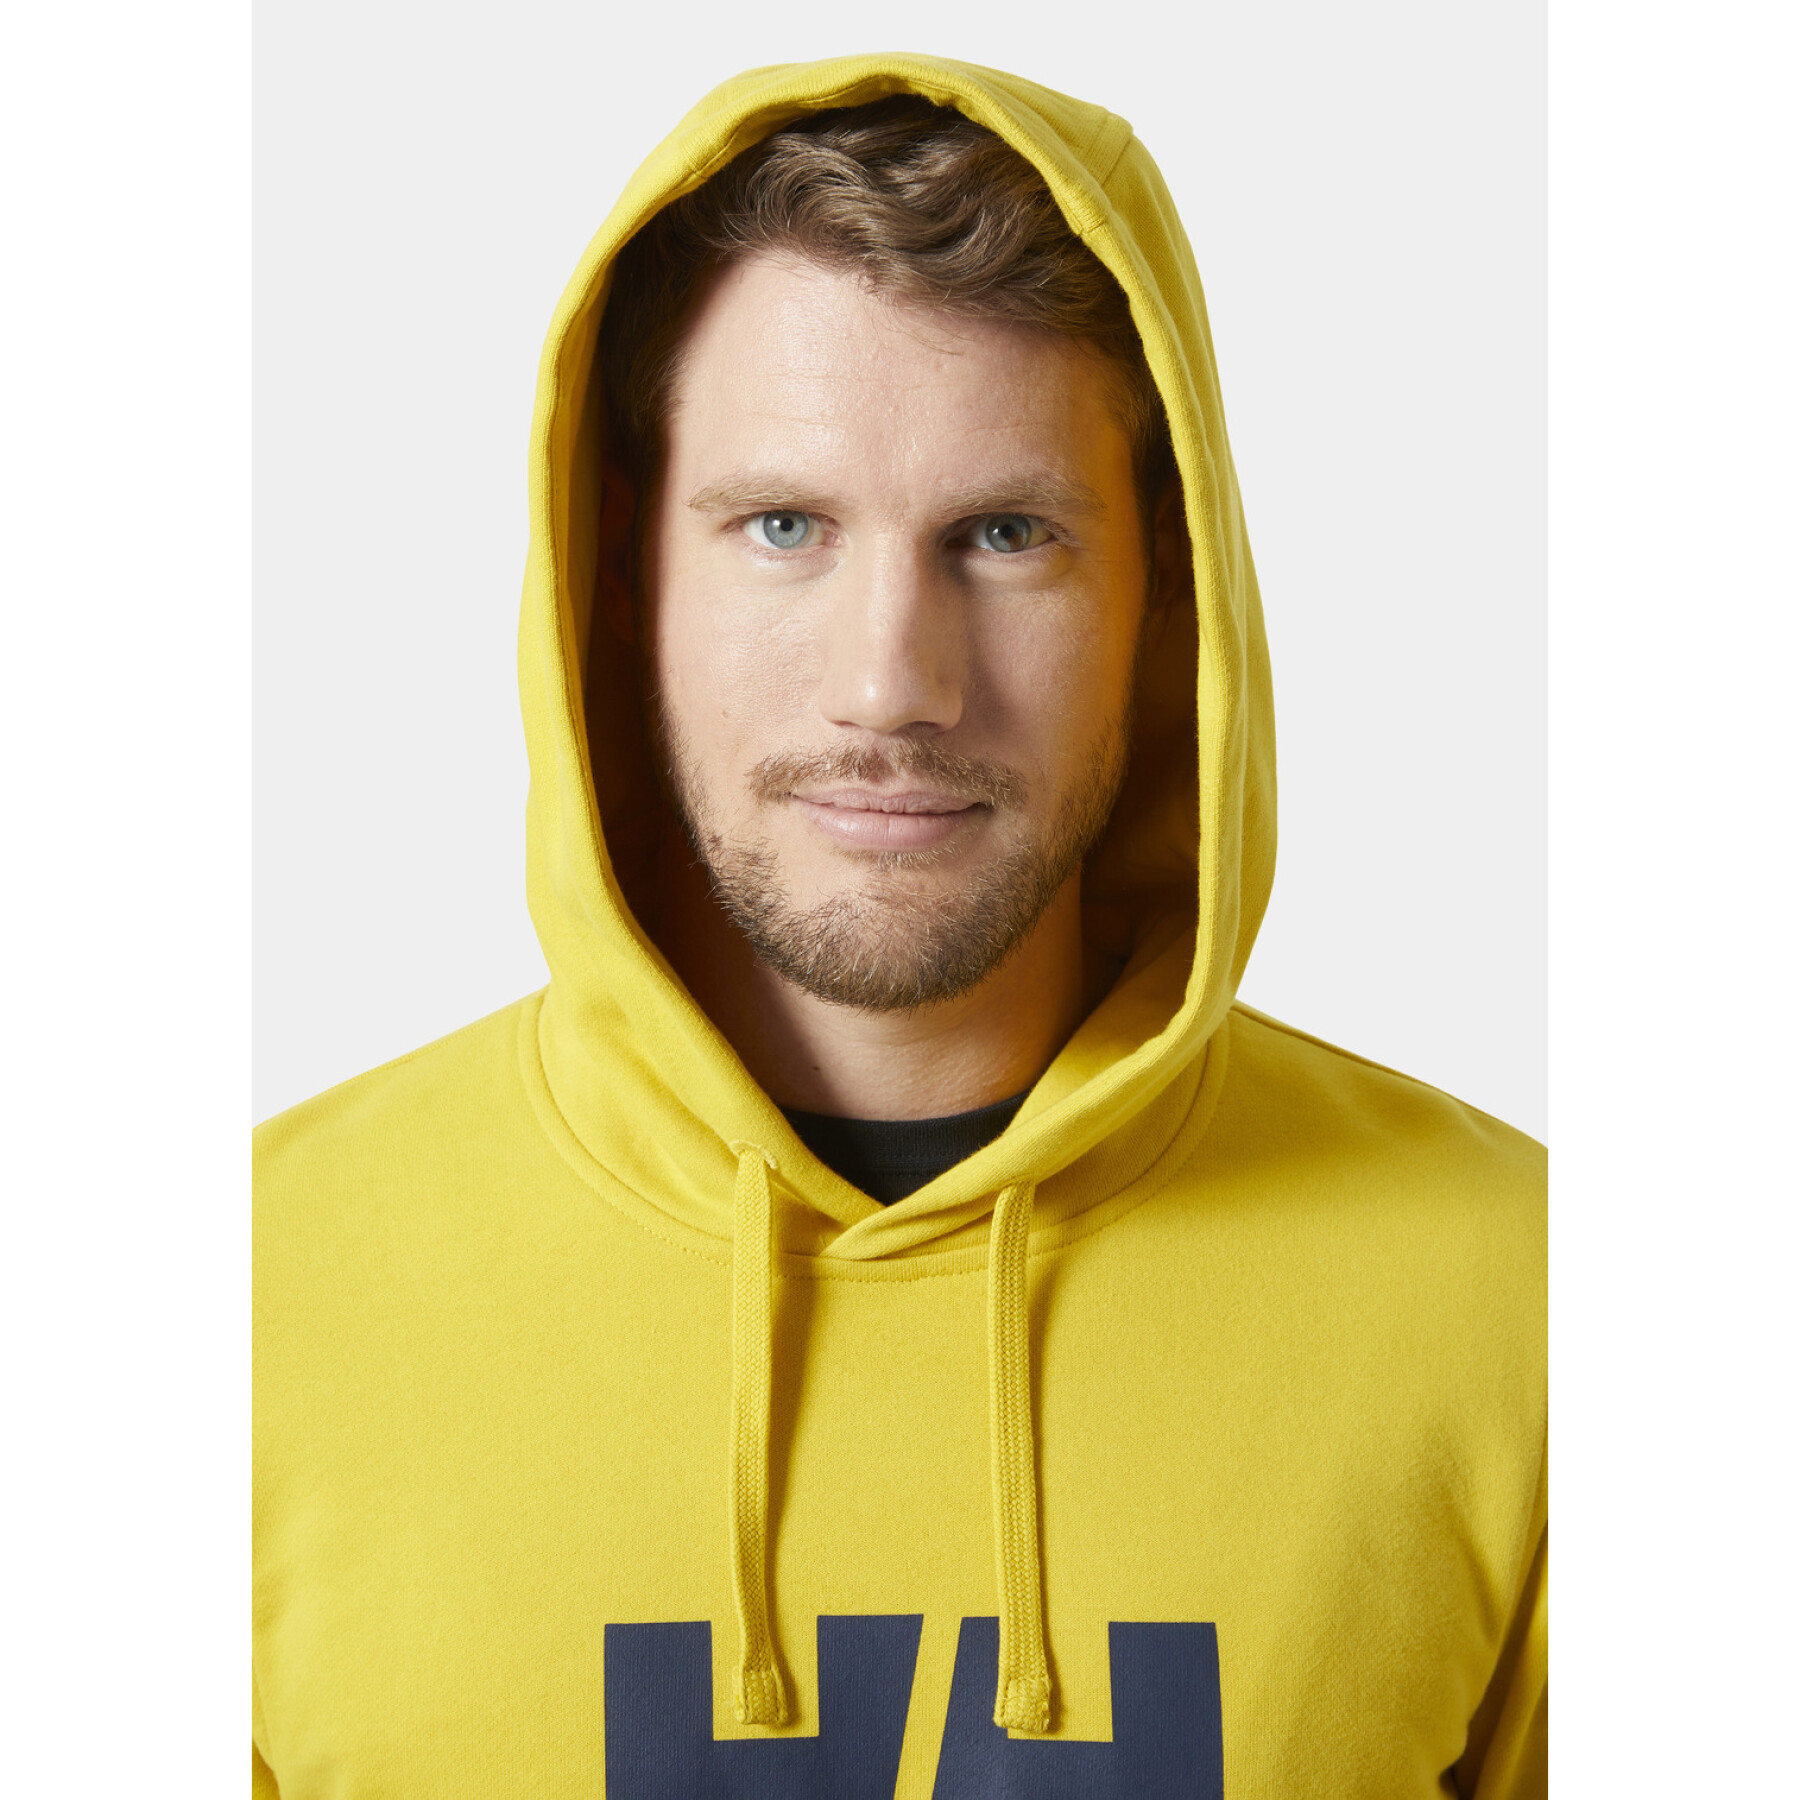 Sweatshirt à capuche avec logo Helly Hansen